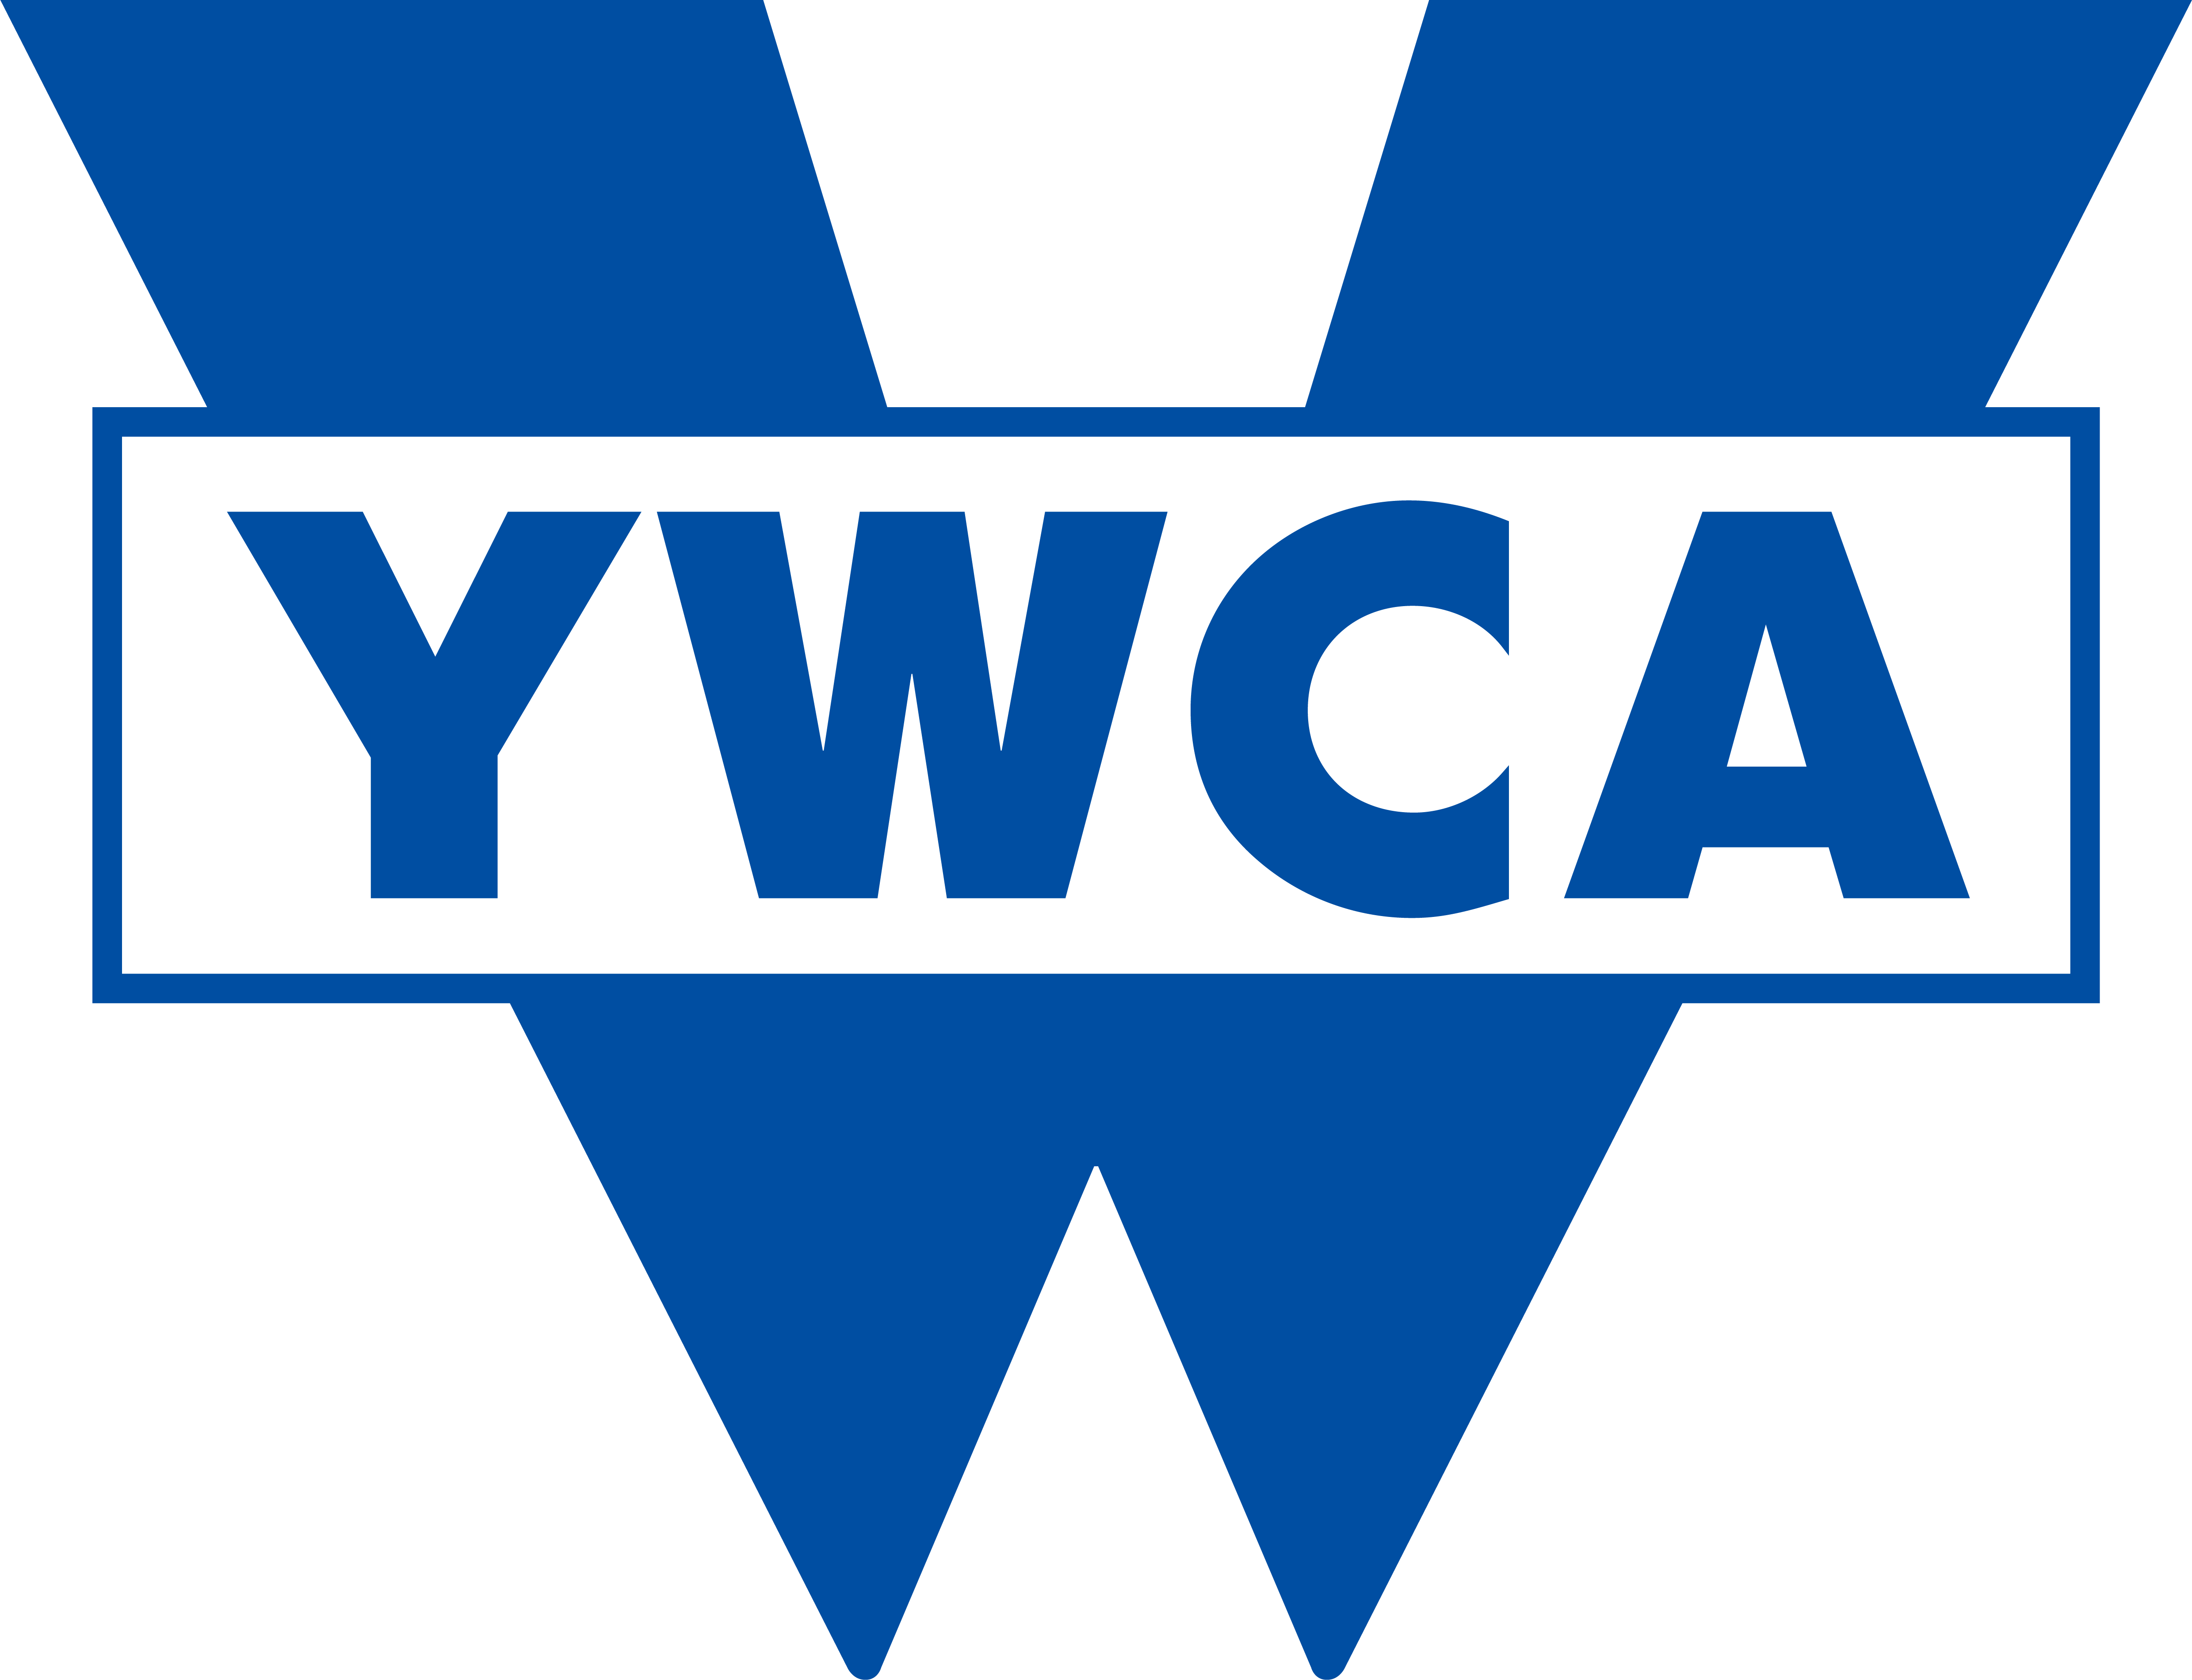 YWCA 온라인 교육 홈페이지